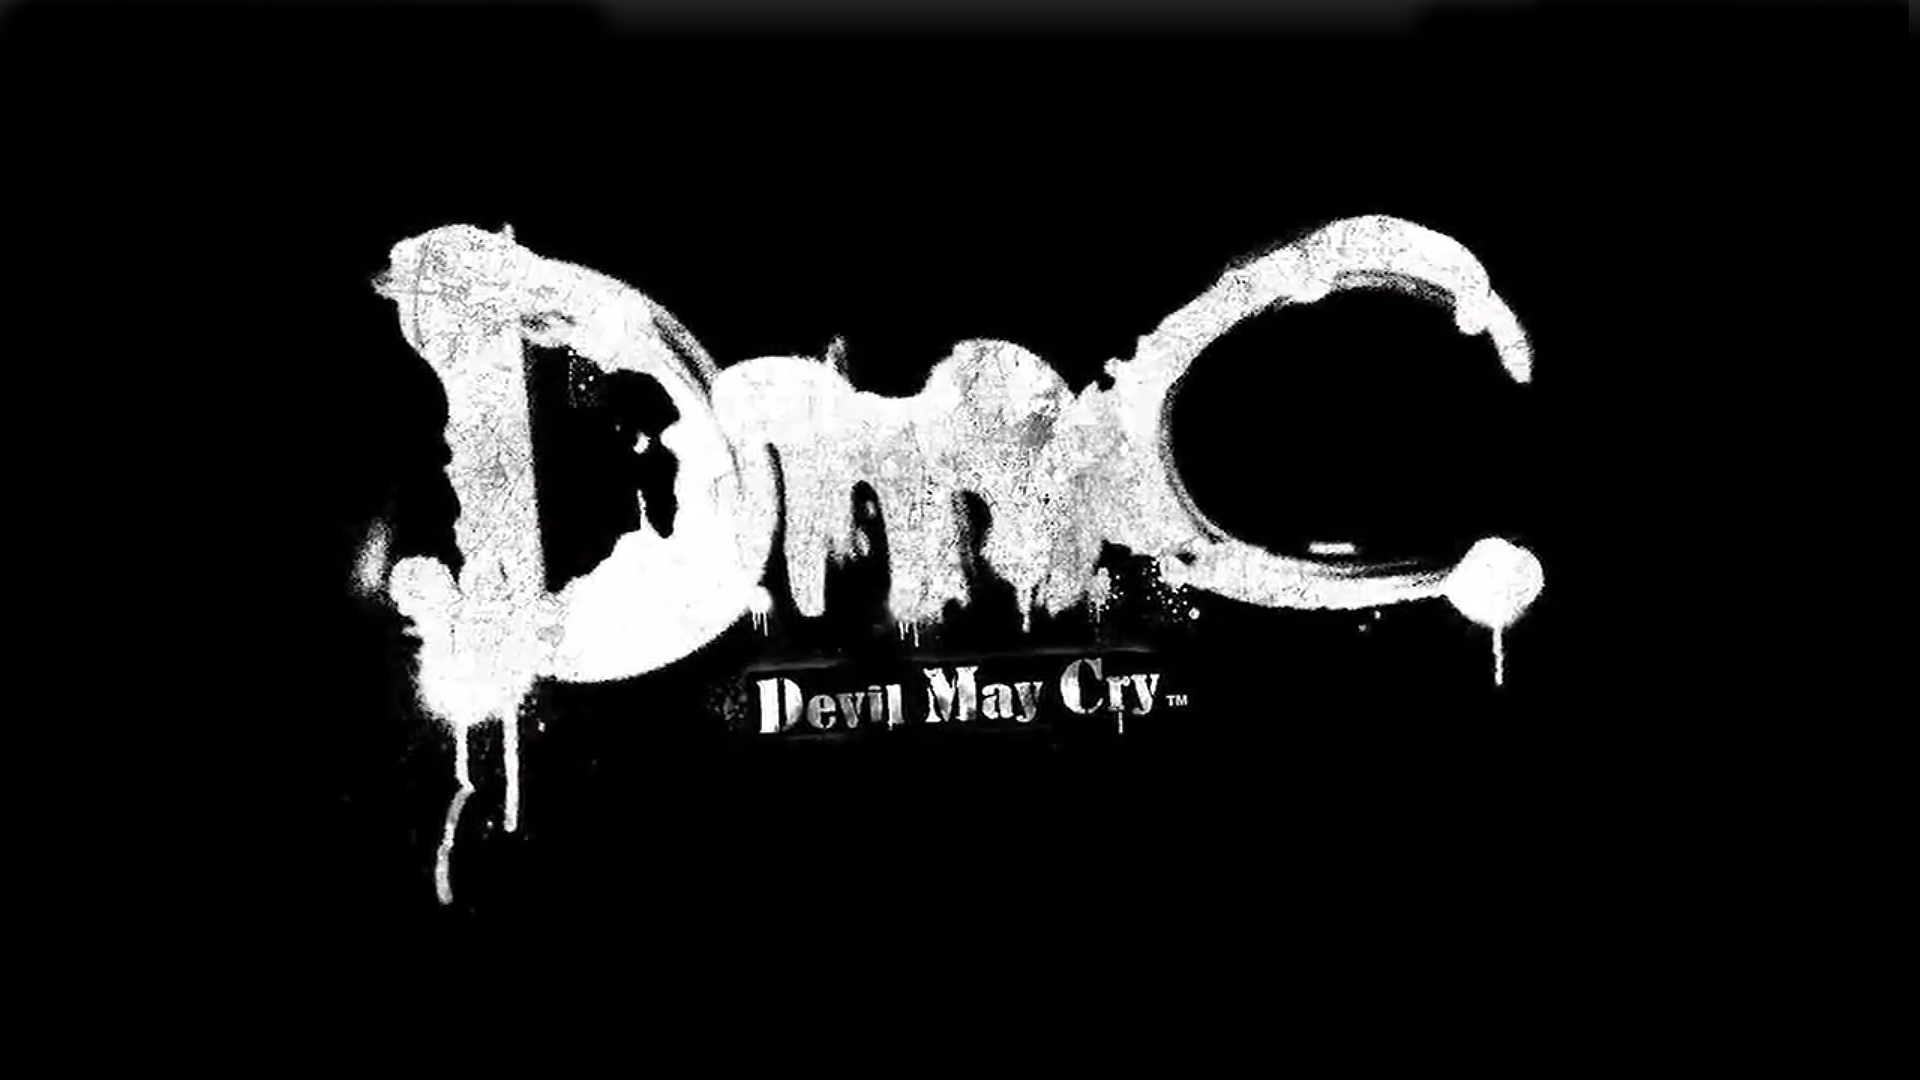 DMC Wallpaper. DMC Wallpaper, DmC Dante